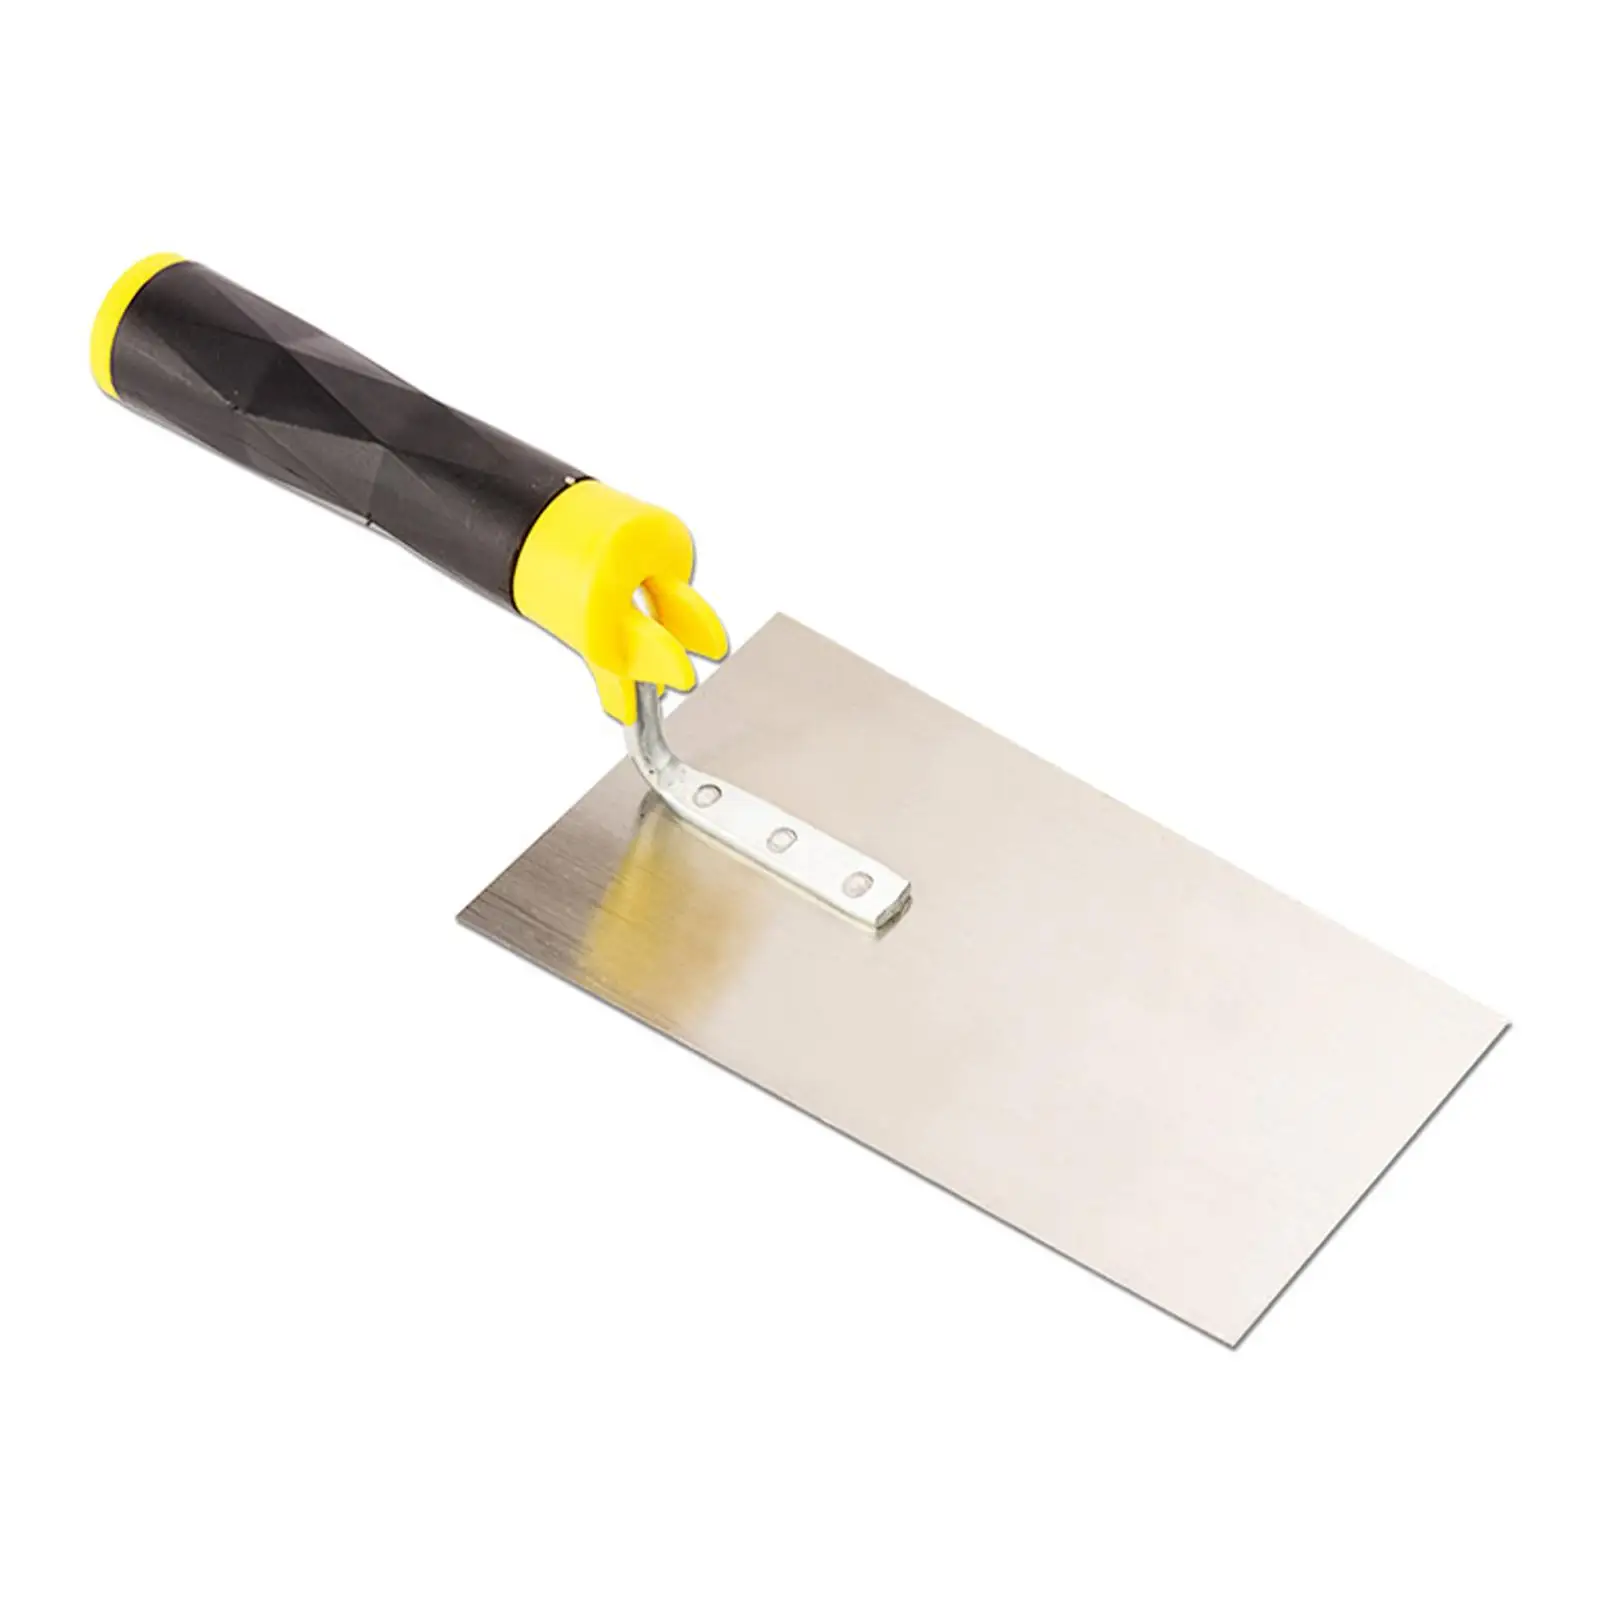 Wallpaper Scraper Spackle Knife Tool Multipurpose Filling Spatula for Adhesive Decals Applying Putty Wood Wallpaper Plaster